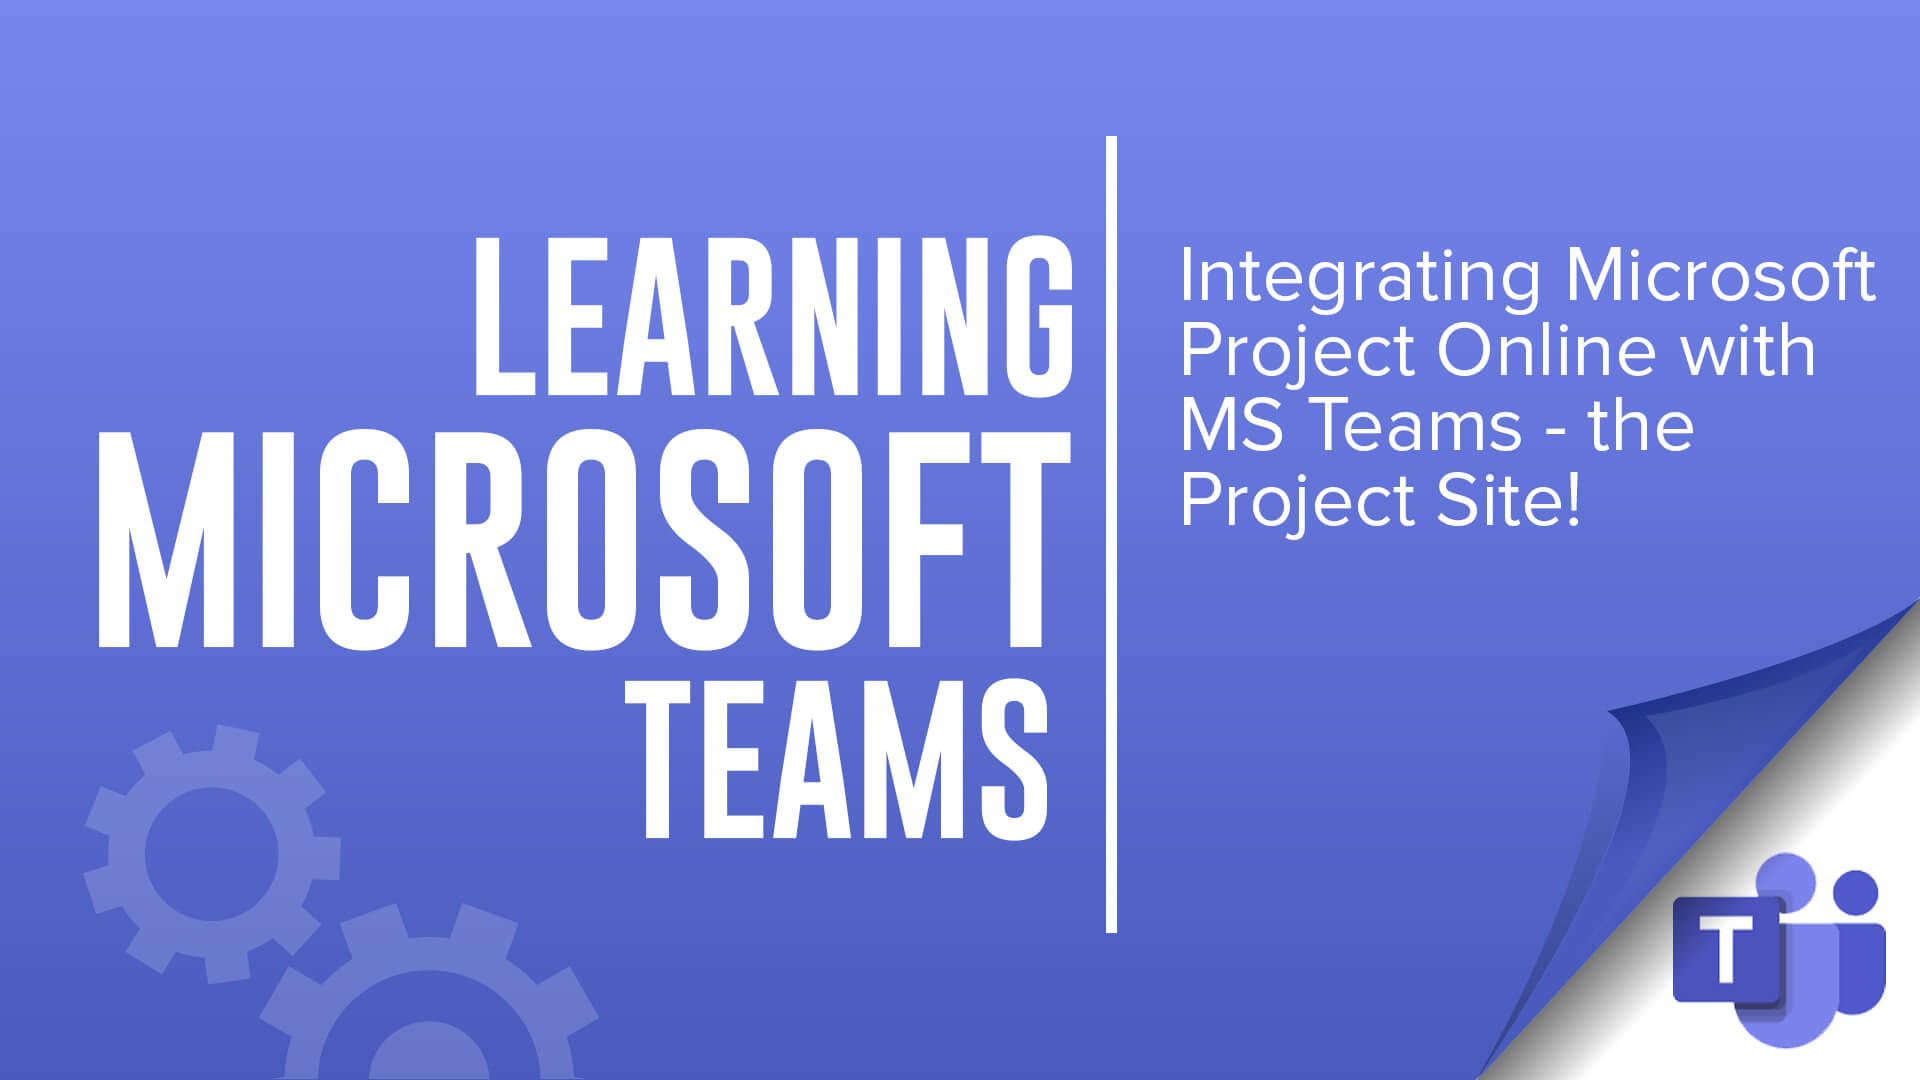 learning Microsoft Teams - Integrating Microsoft Project Online and Microsoft Teams - the project site